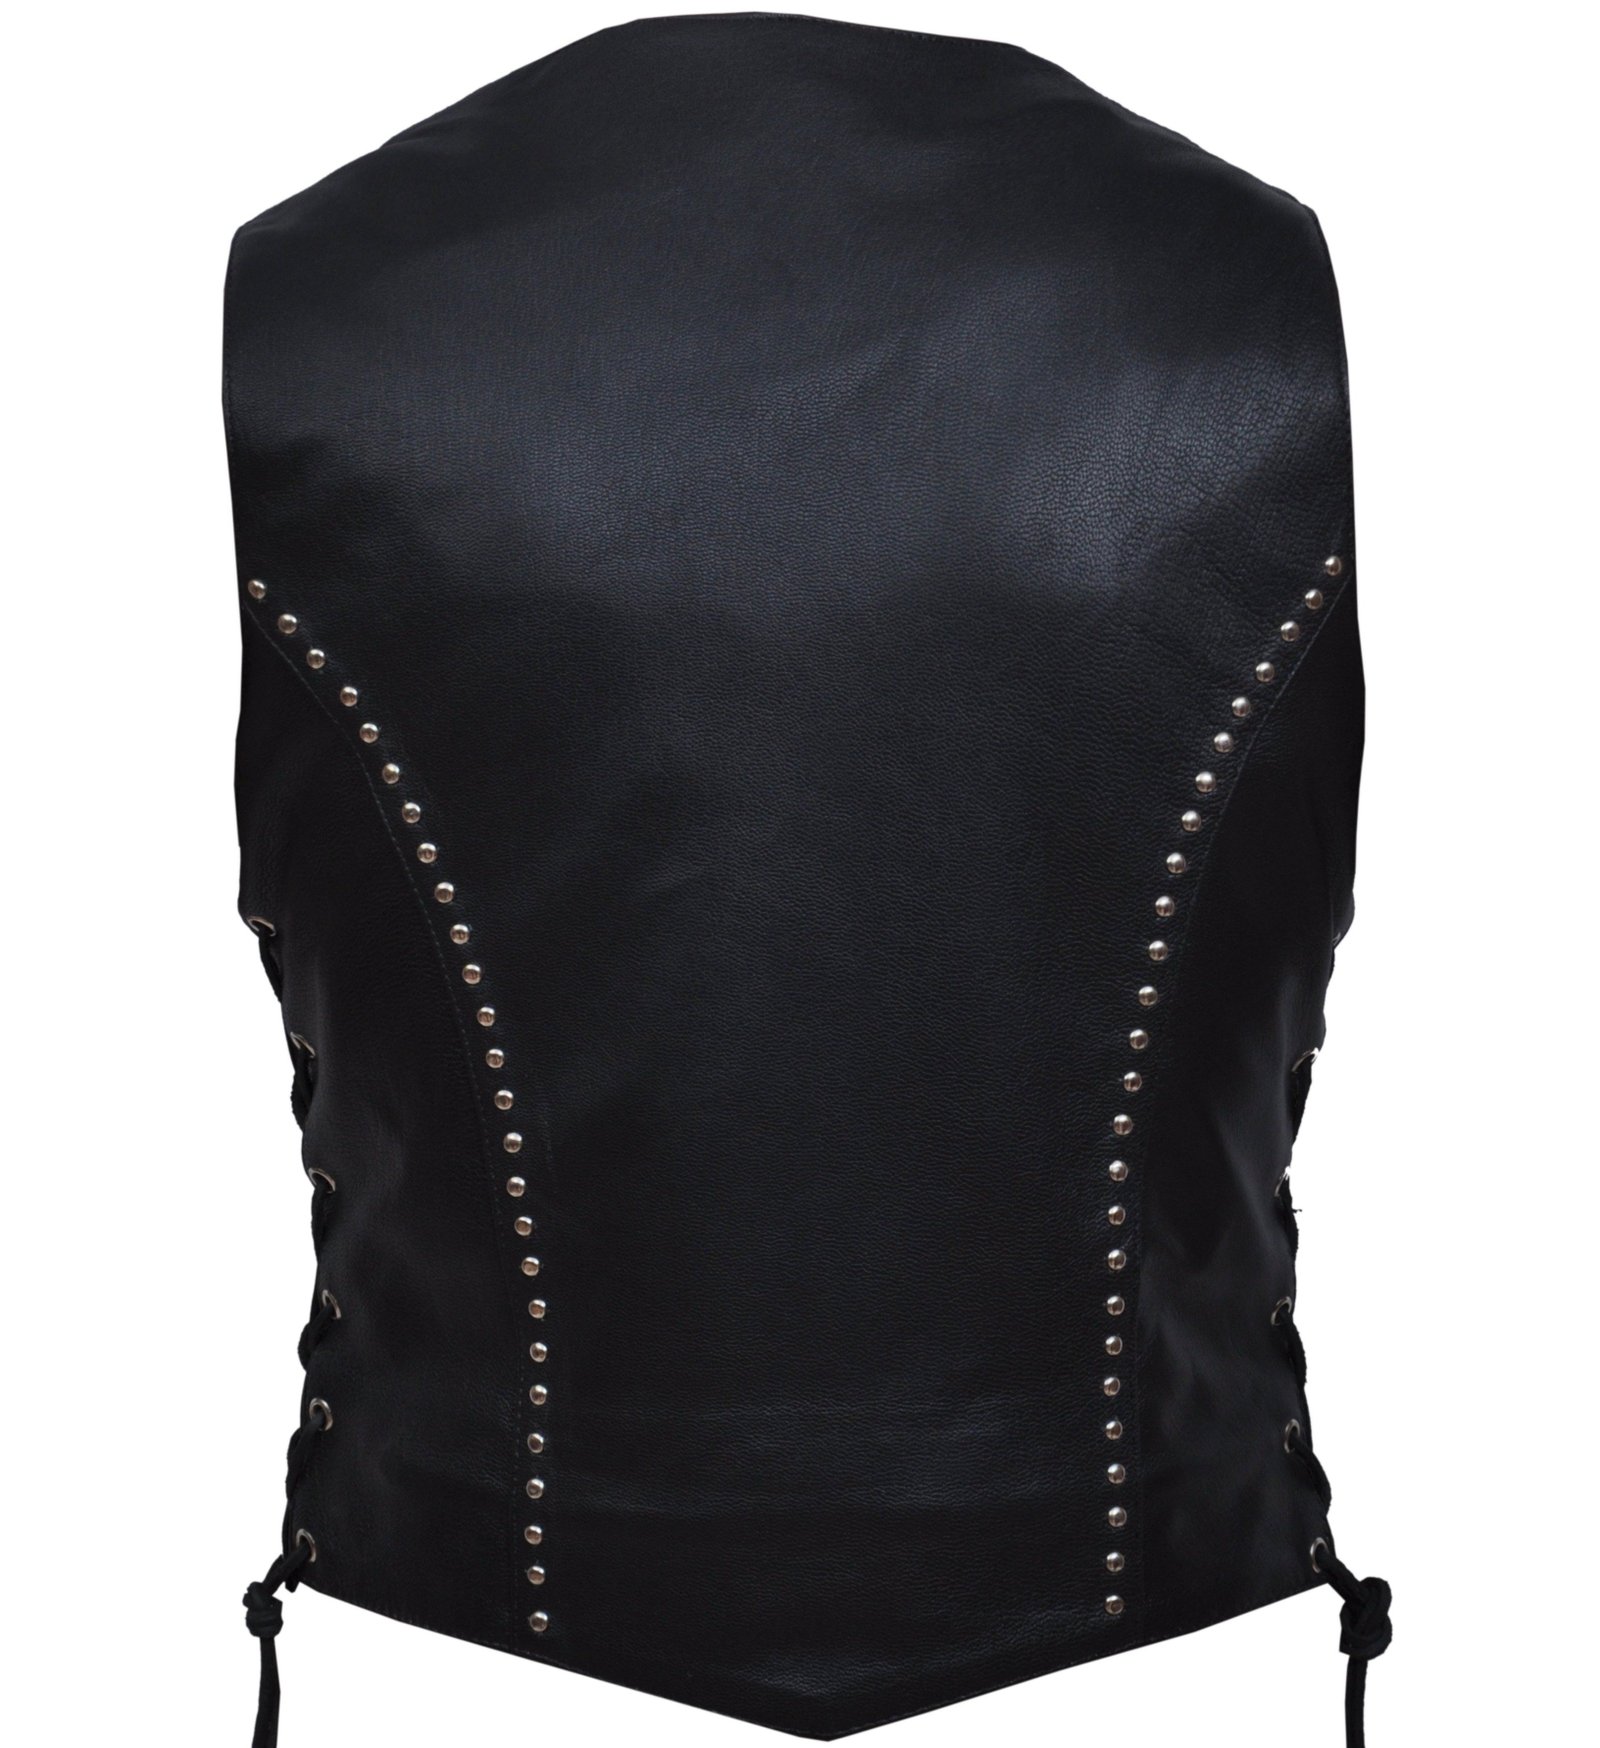 Leather Vest - Women's - Studded - Side Laces - Motorcycle - 2666-00-UN